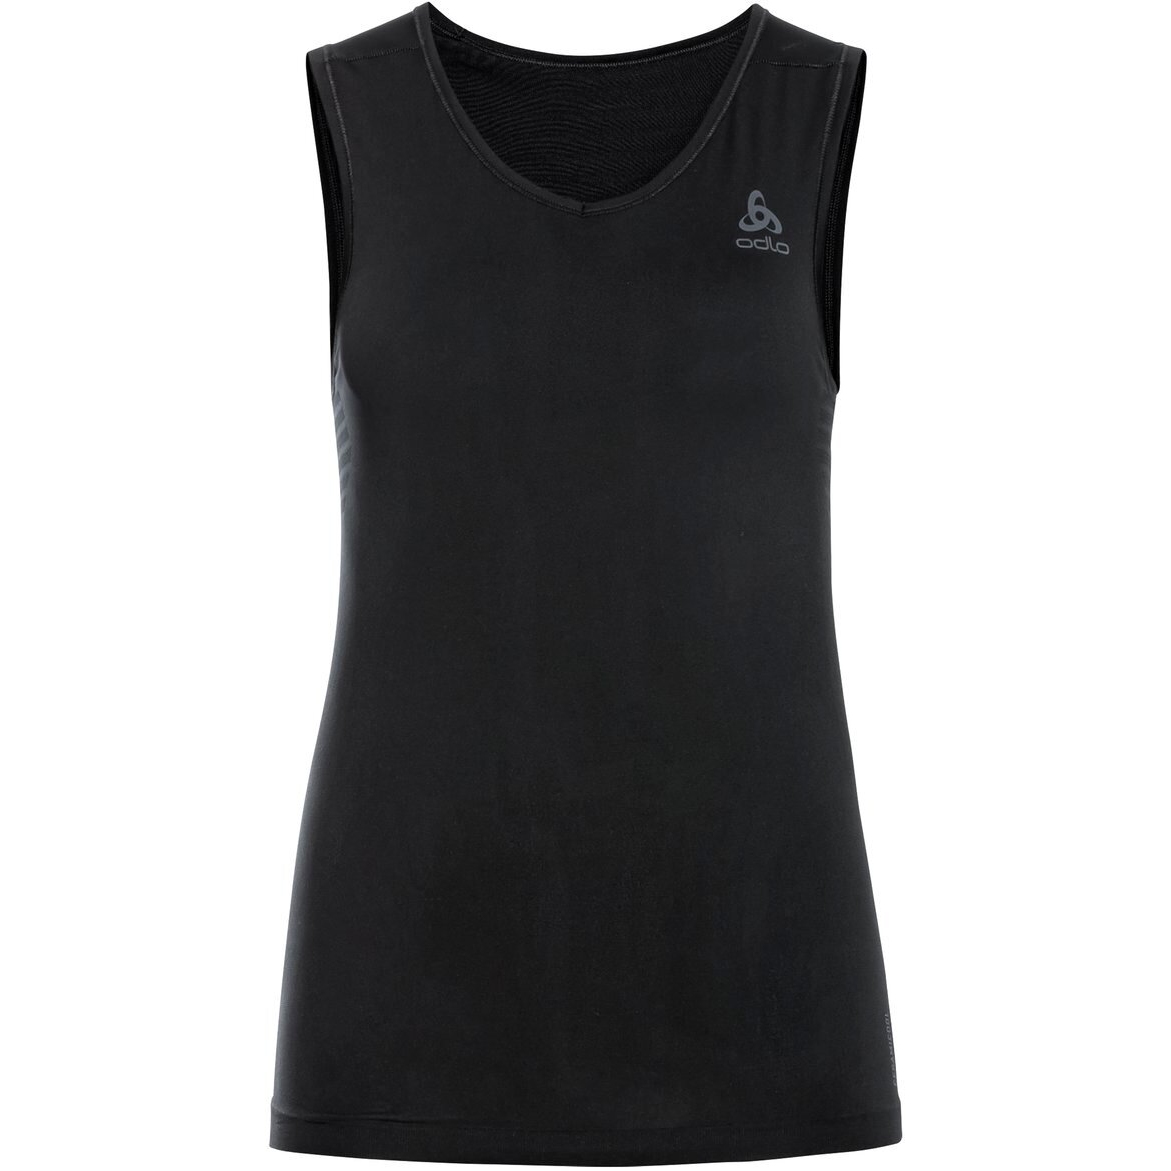 Productfoto van Odlo Performance X-Light V-Neck Hemd zonder Mouwen Dames - zwart